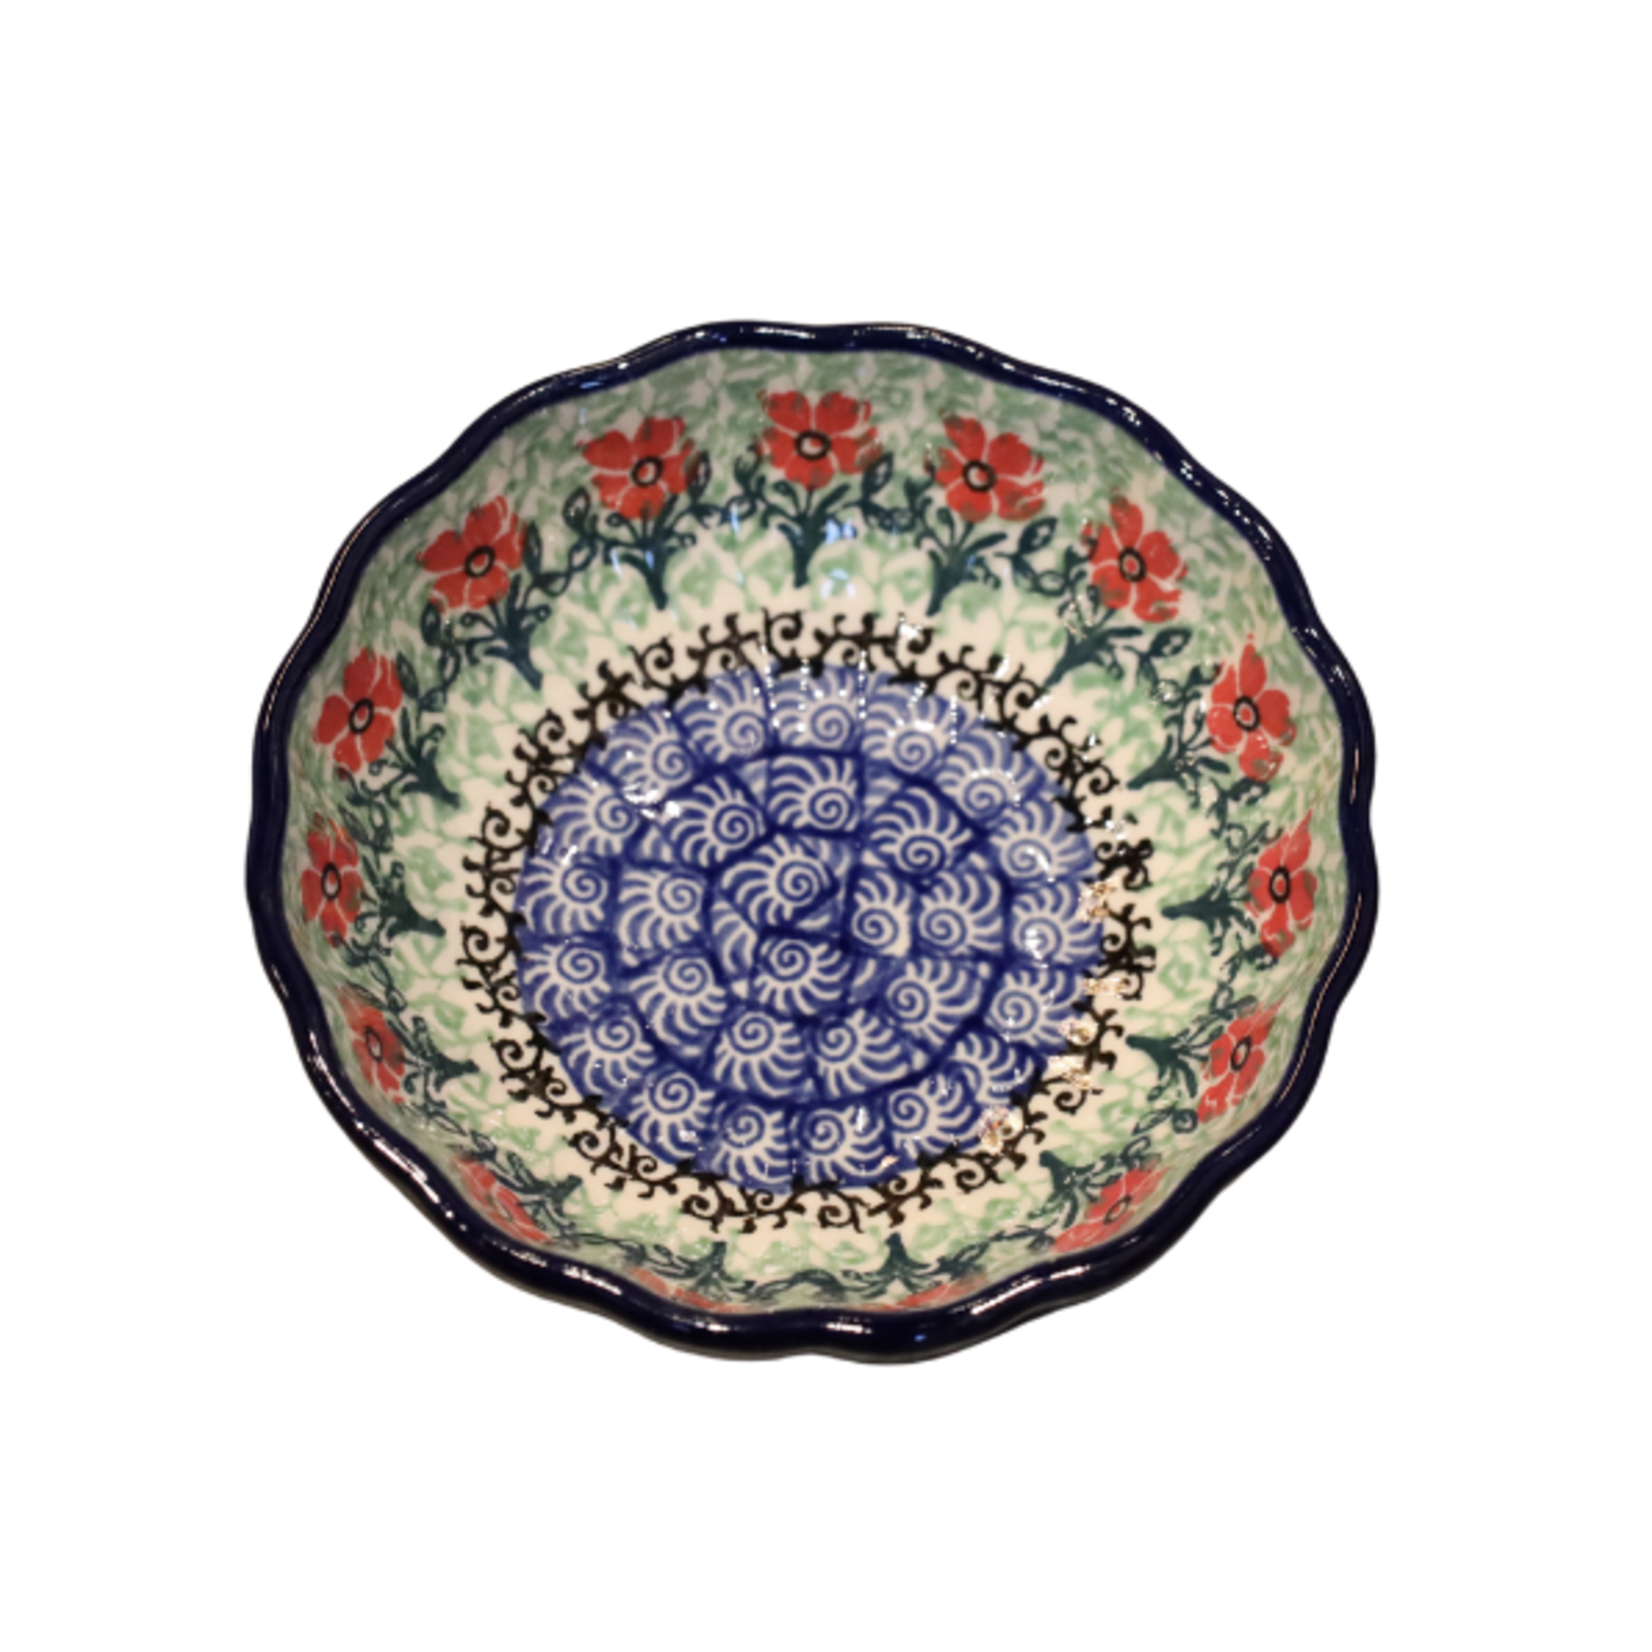 European Design Imports Inc. Polish Pottery Scalloped Bowl, 4.5" Red Flowers